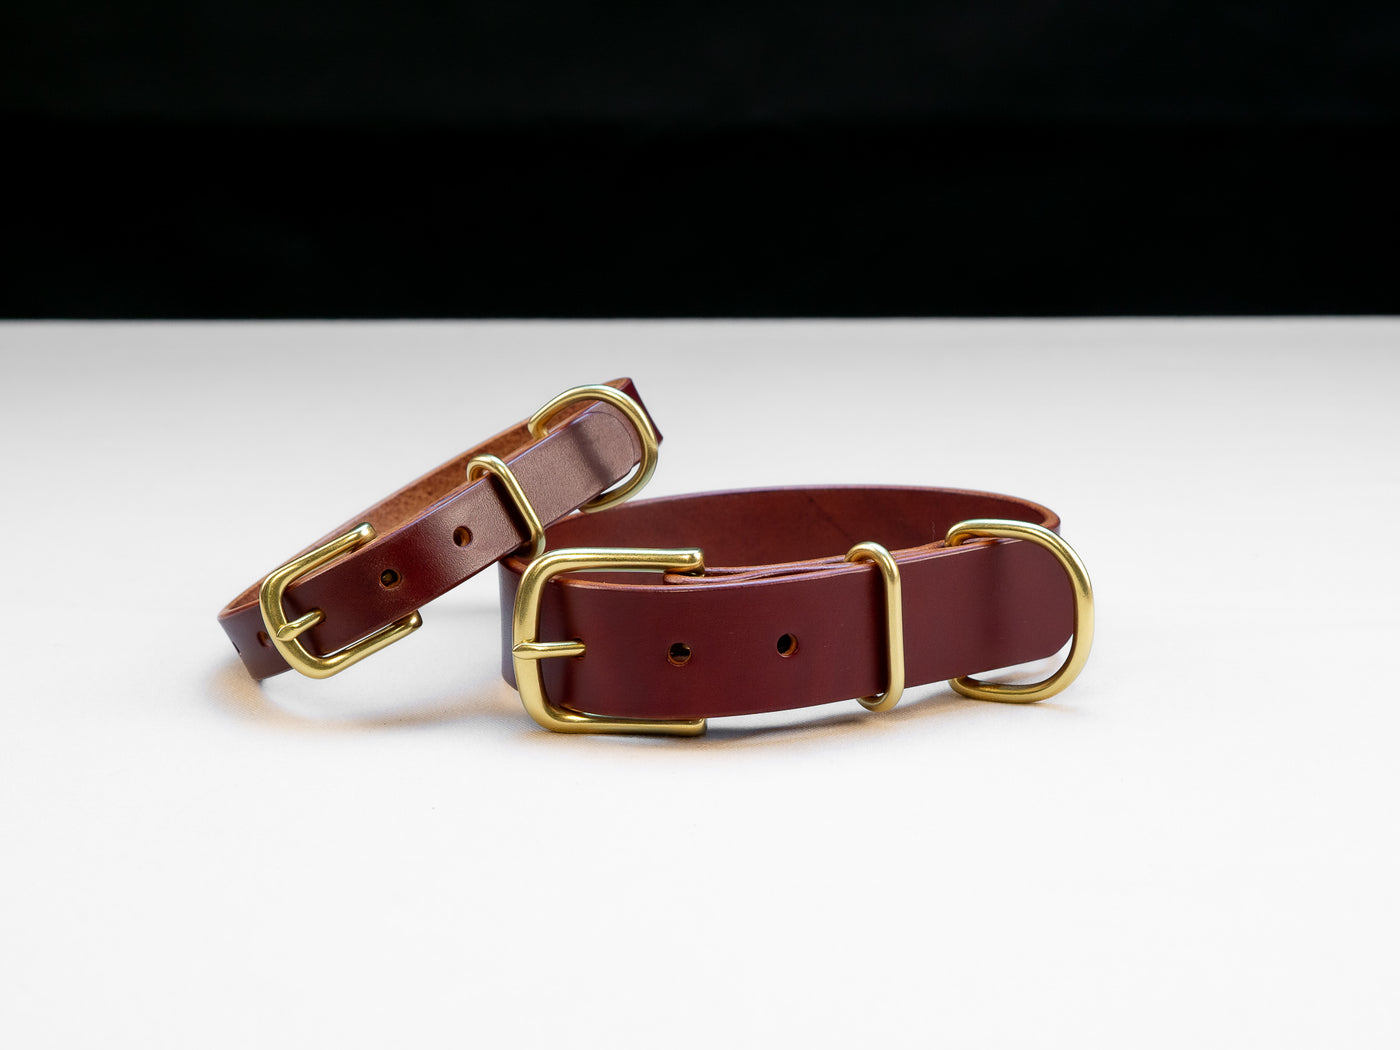 Leather Belt Dog Collar - Burgundy English Bridle Leather - Atlas Leathercraft - Handmade Australian Leather Goods